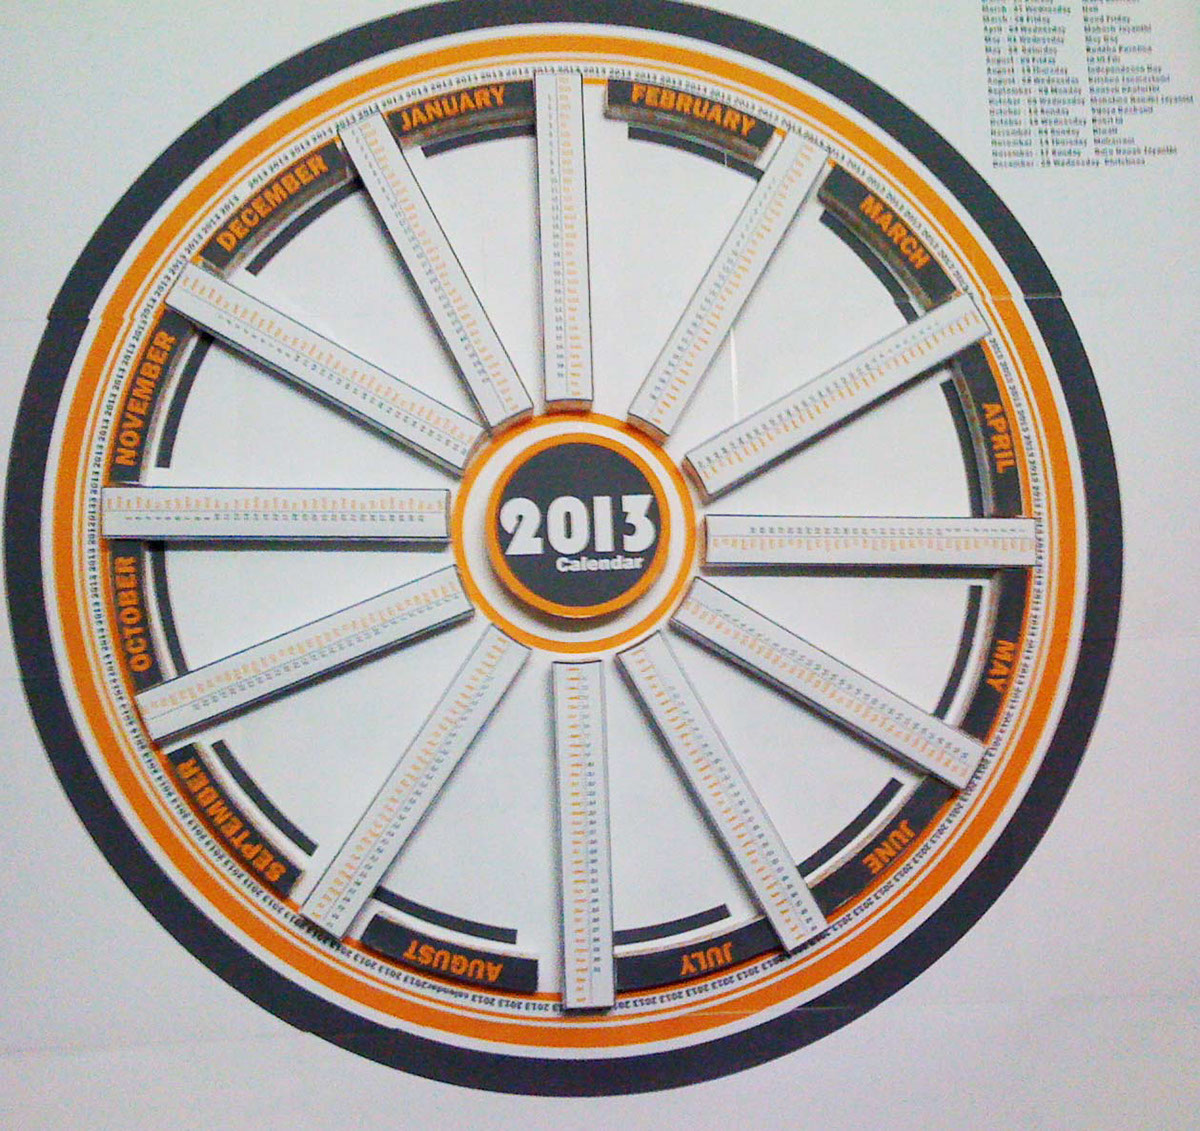 2013 calandar  3d  3d infographic  infographic typography  